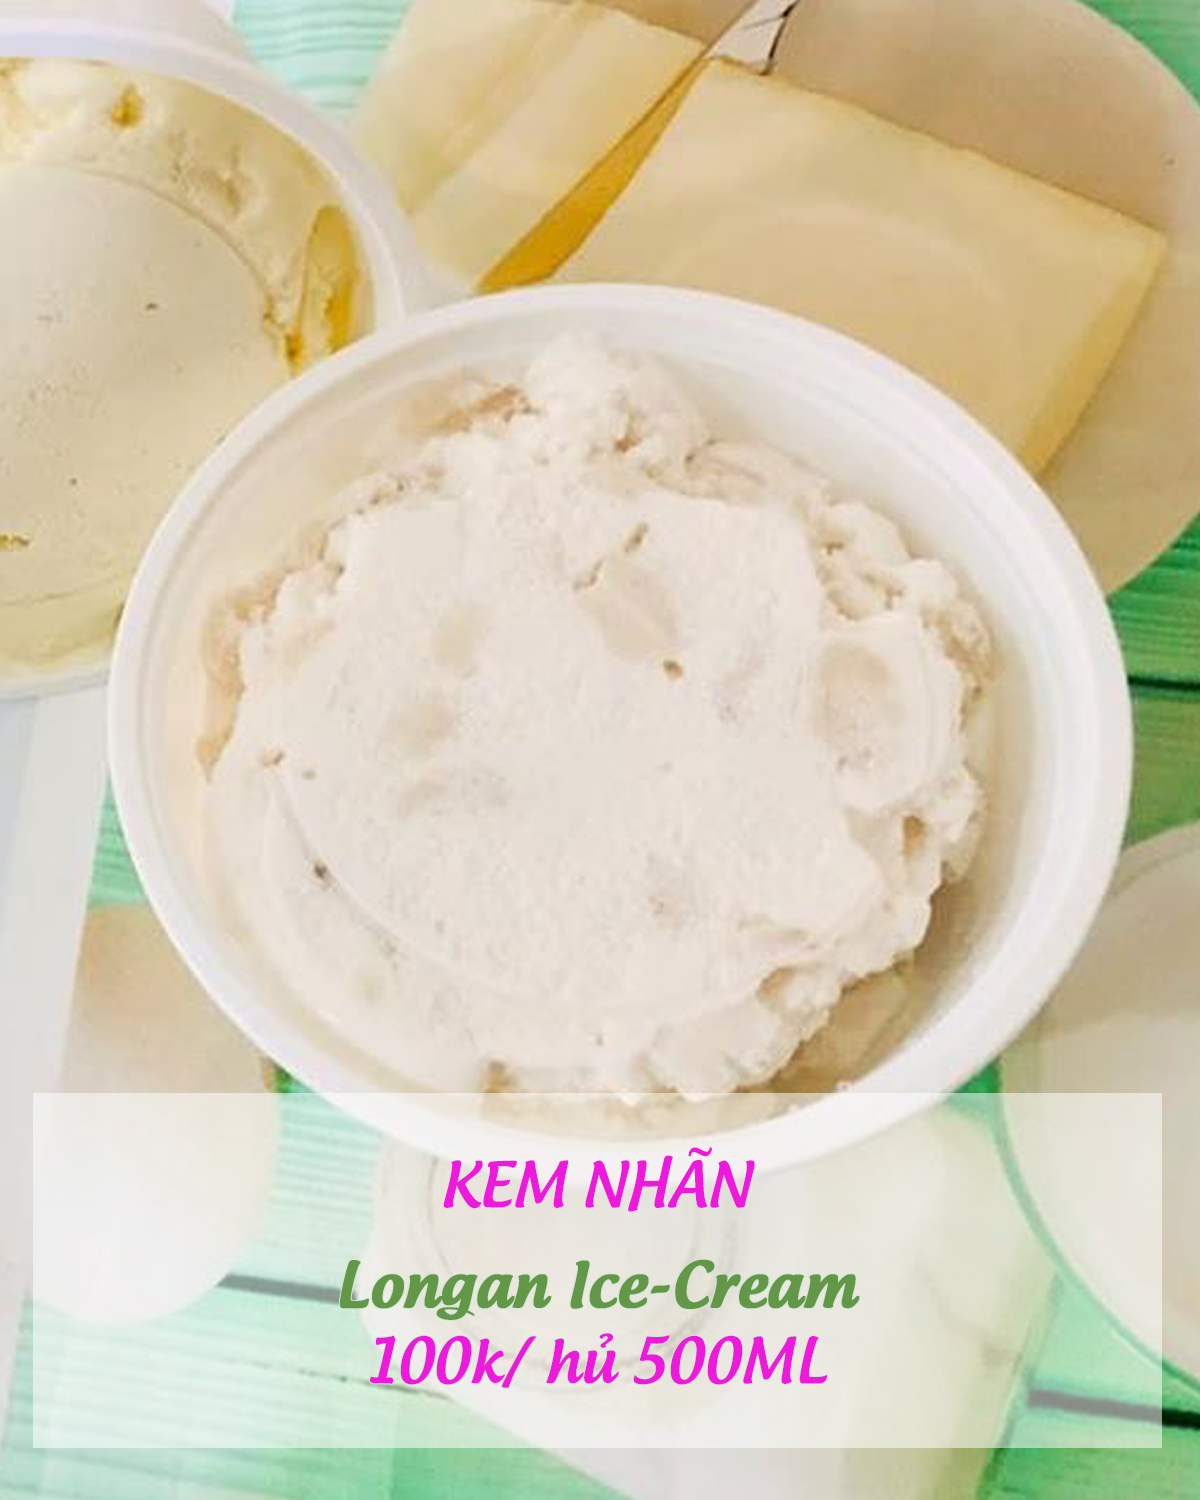 Kem nhãn / longan ice-cream